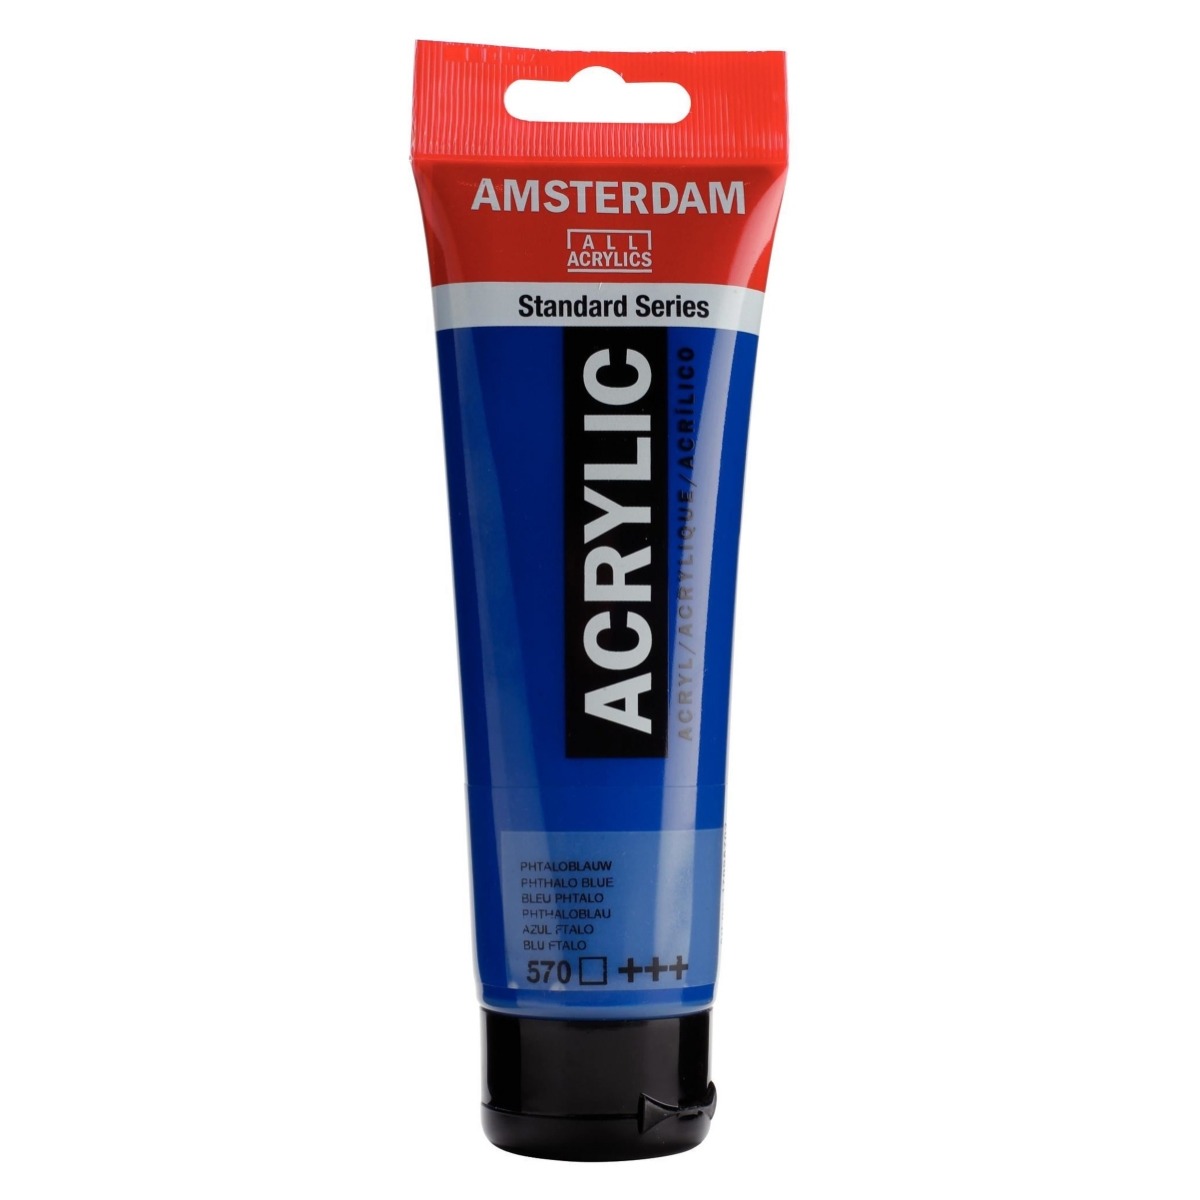 Acrilic Standard 120ml Amsterdam albastru phthalo 17095702